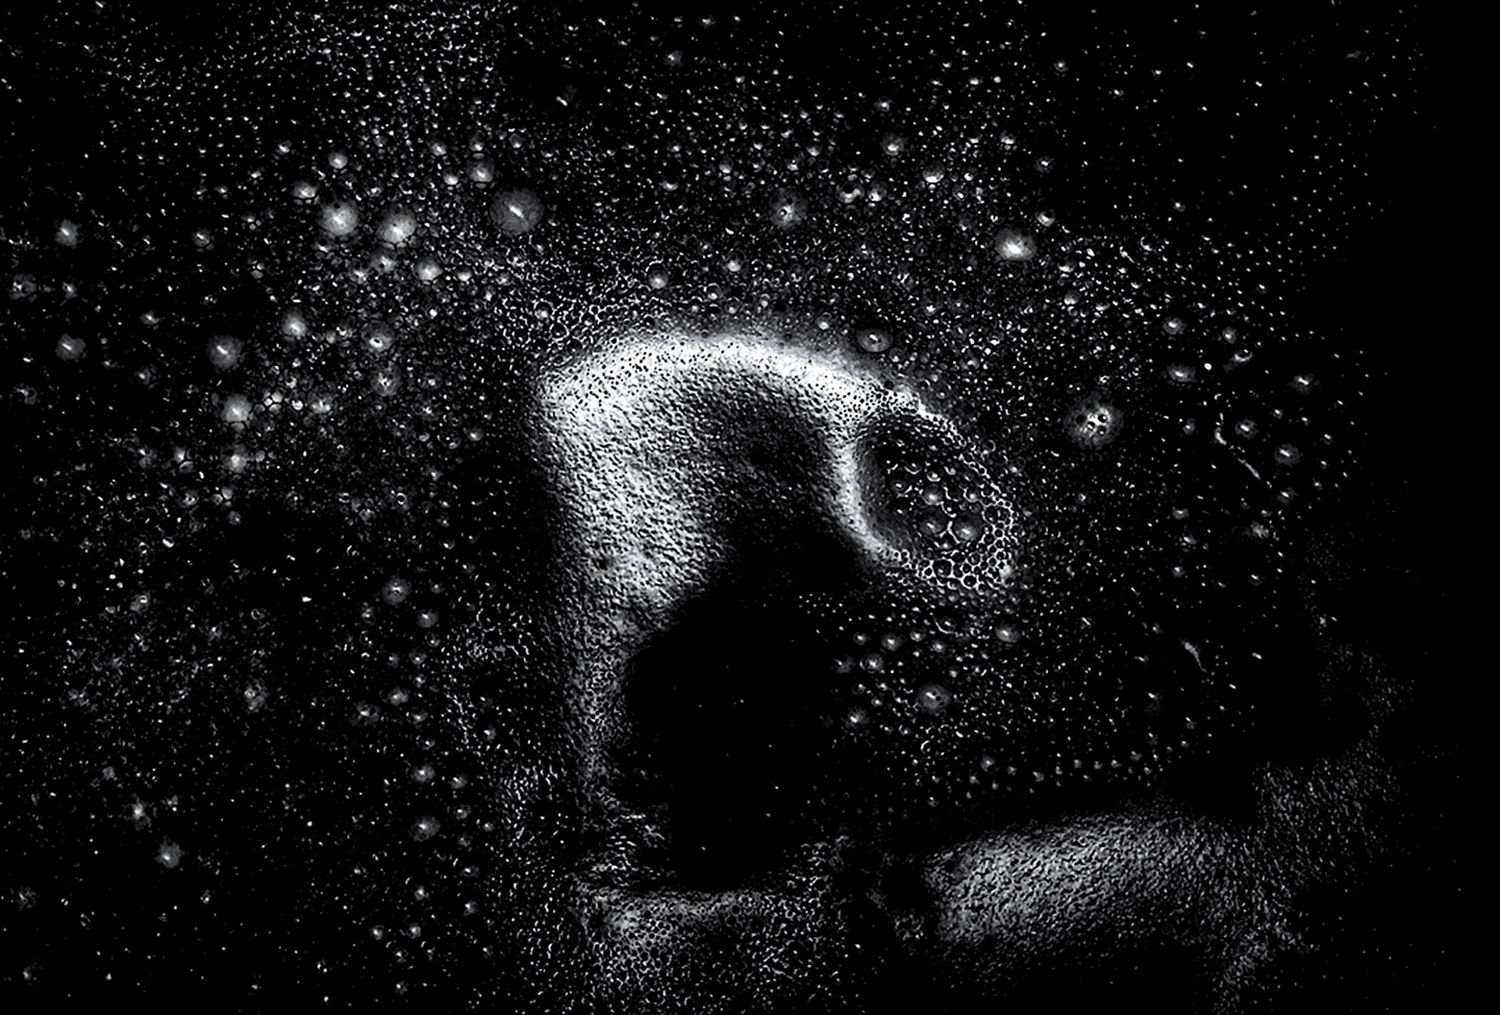 Tiny Immensity #13 - Clogged Sink/Washing Her Hair With Stars ©2019 L. Aviva Diamond